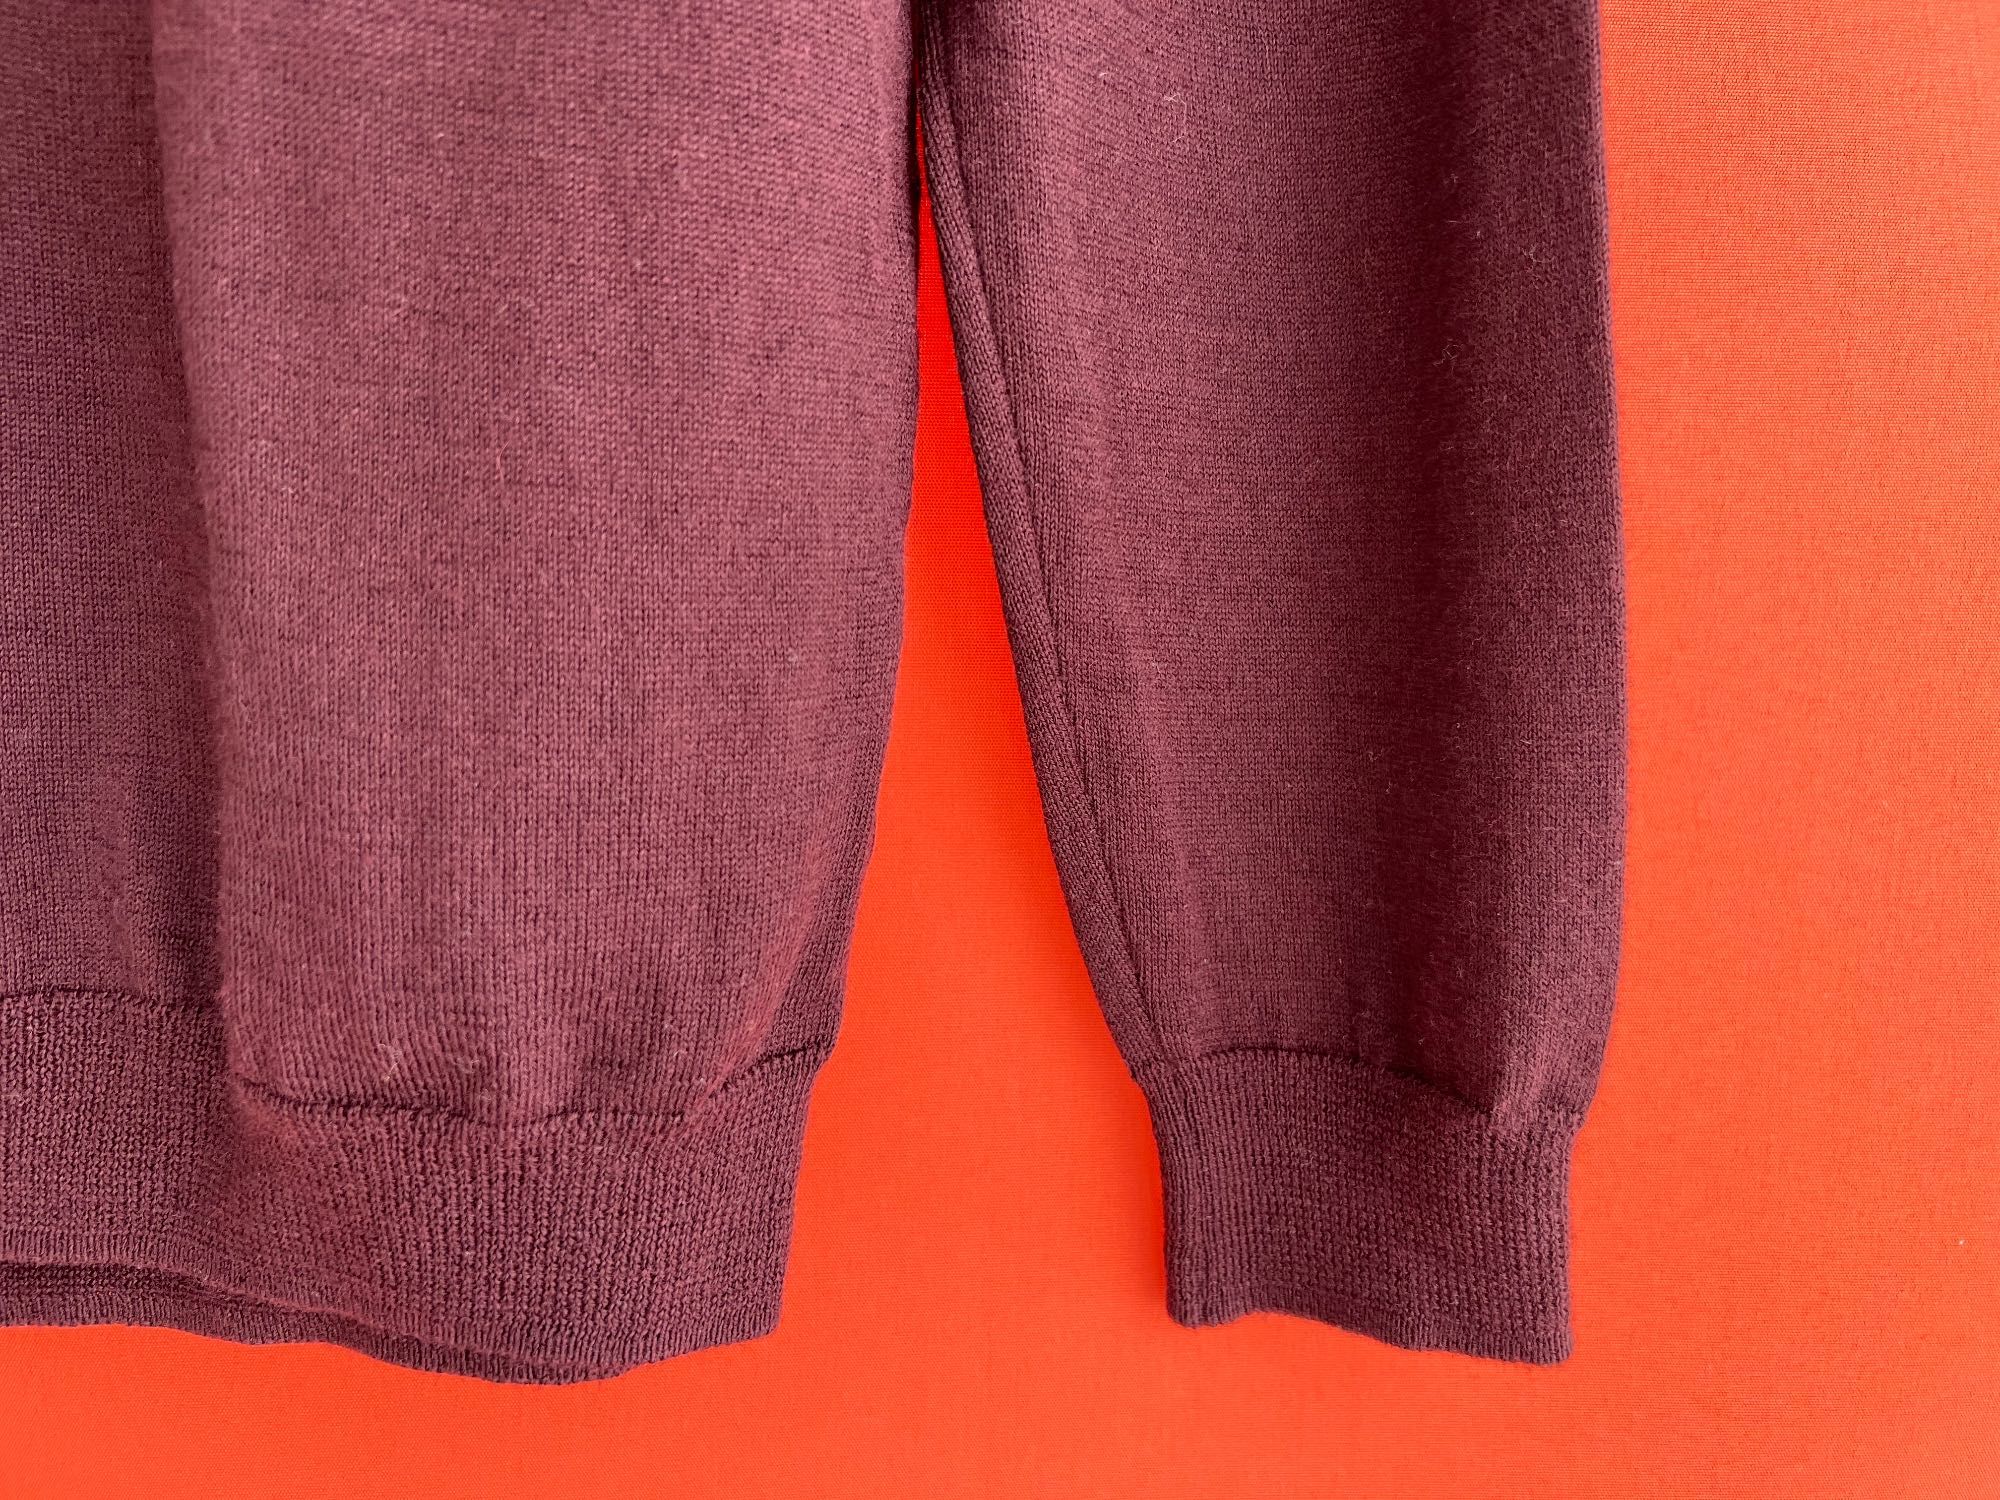 Zara Lana оригинал мужской свитер джемпер гольф кофта размер S M Б У